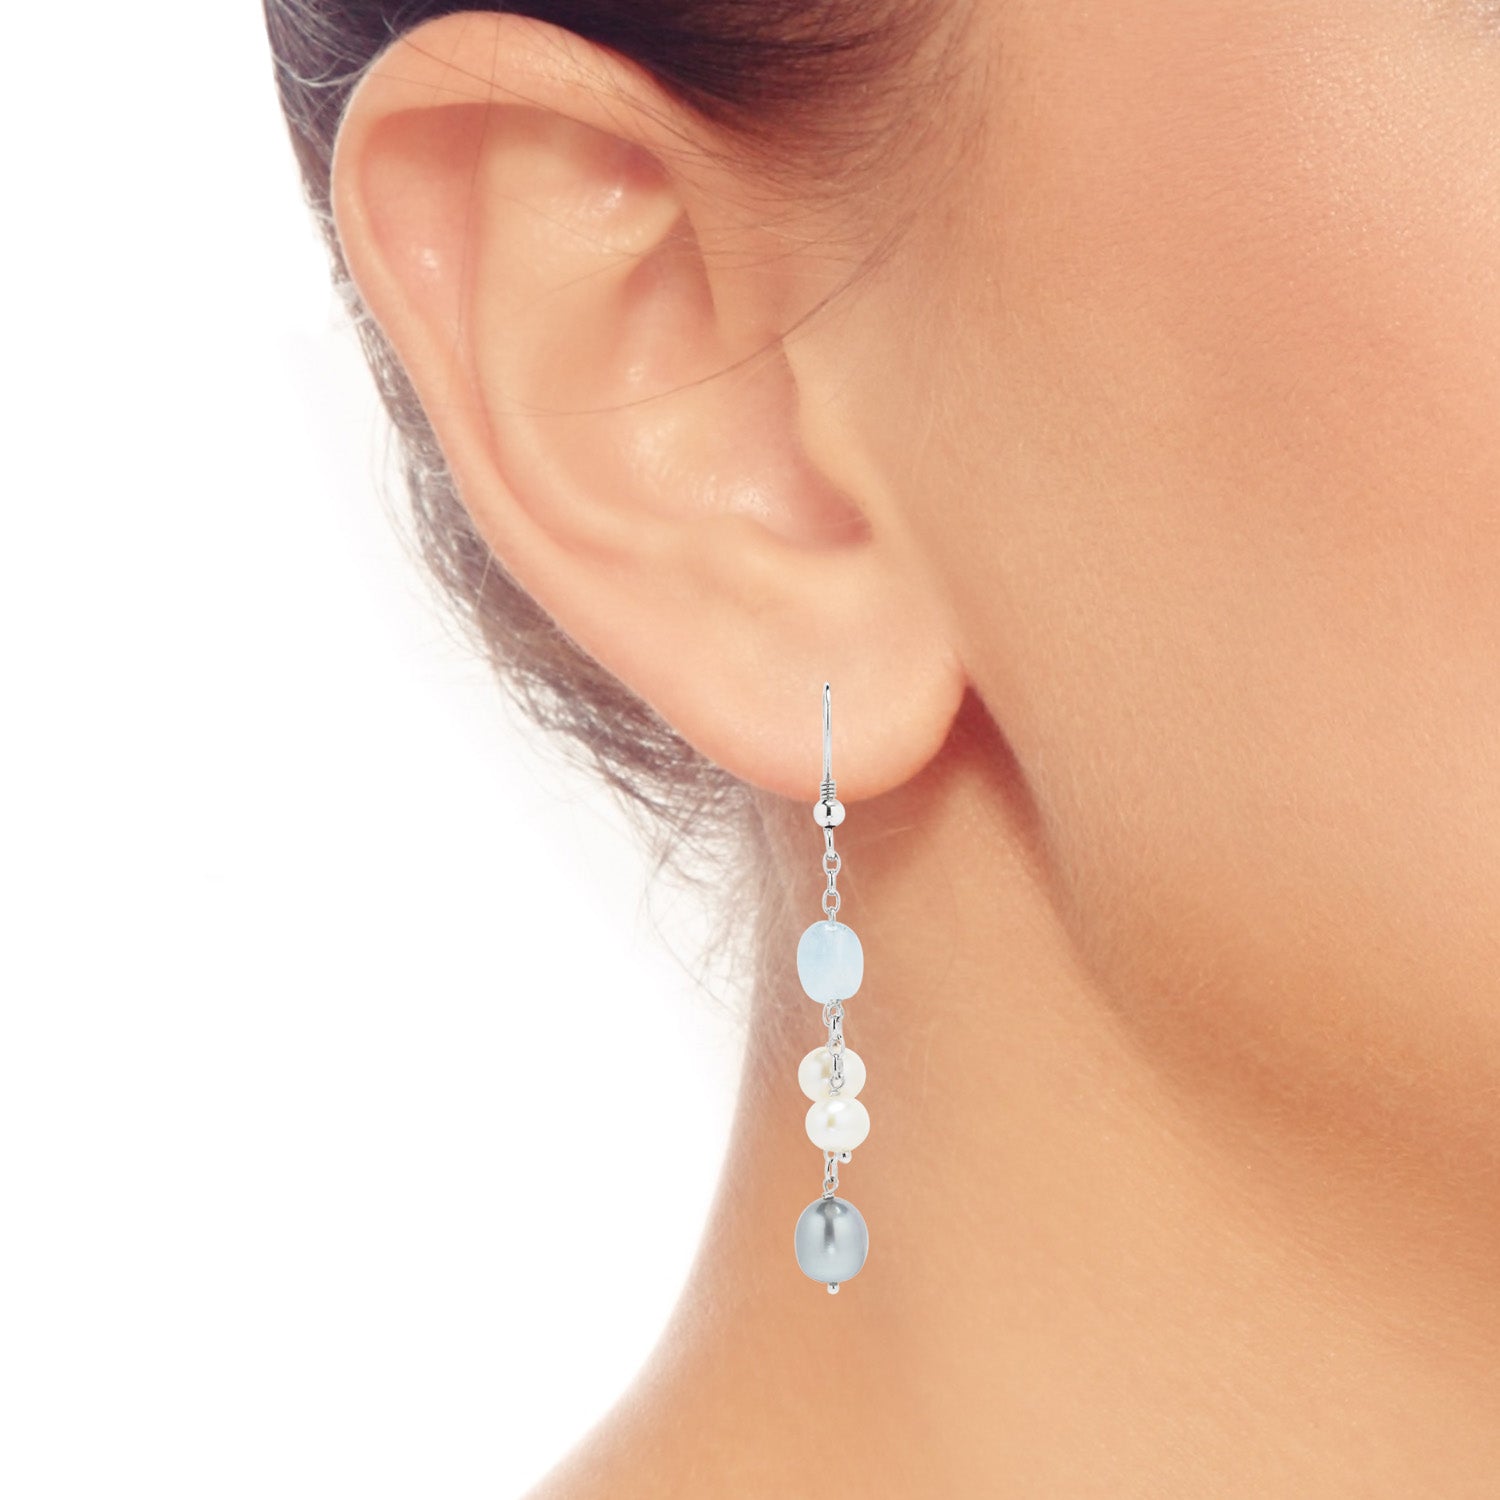 Fresh Water Pearl and Aquamarine Earrings in Sterling Silver (5-6mm pearls)